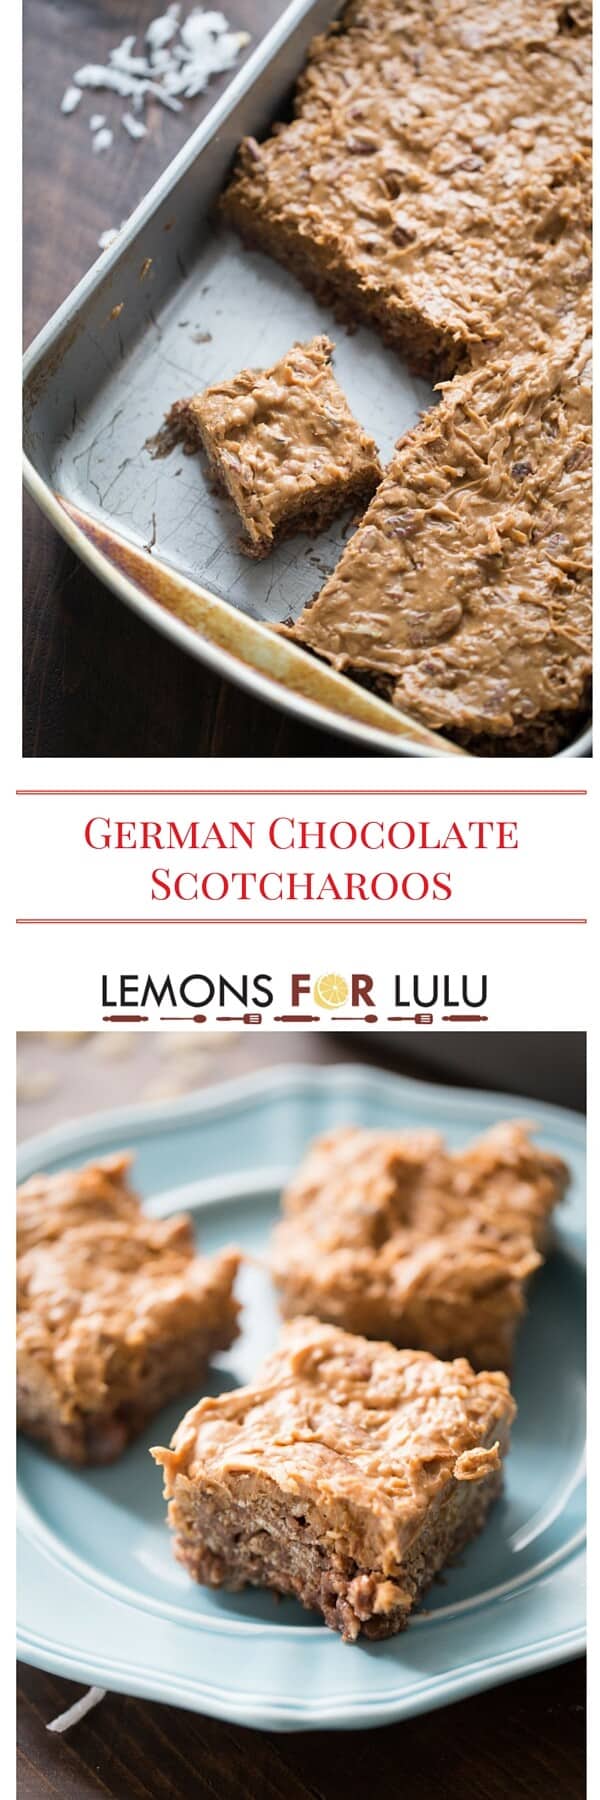 Everyone loves scotcharoos! These German chocolate schotcharoos are irresistible!